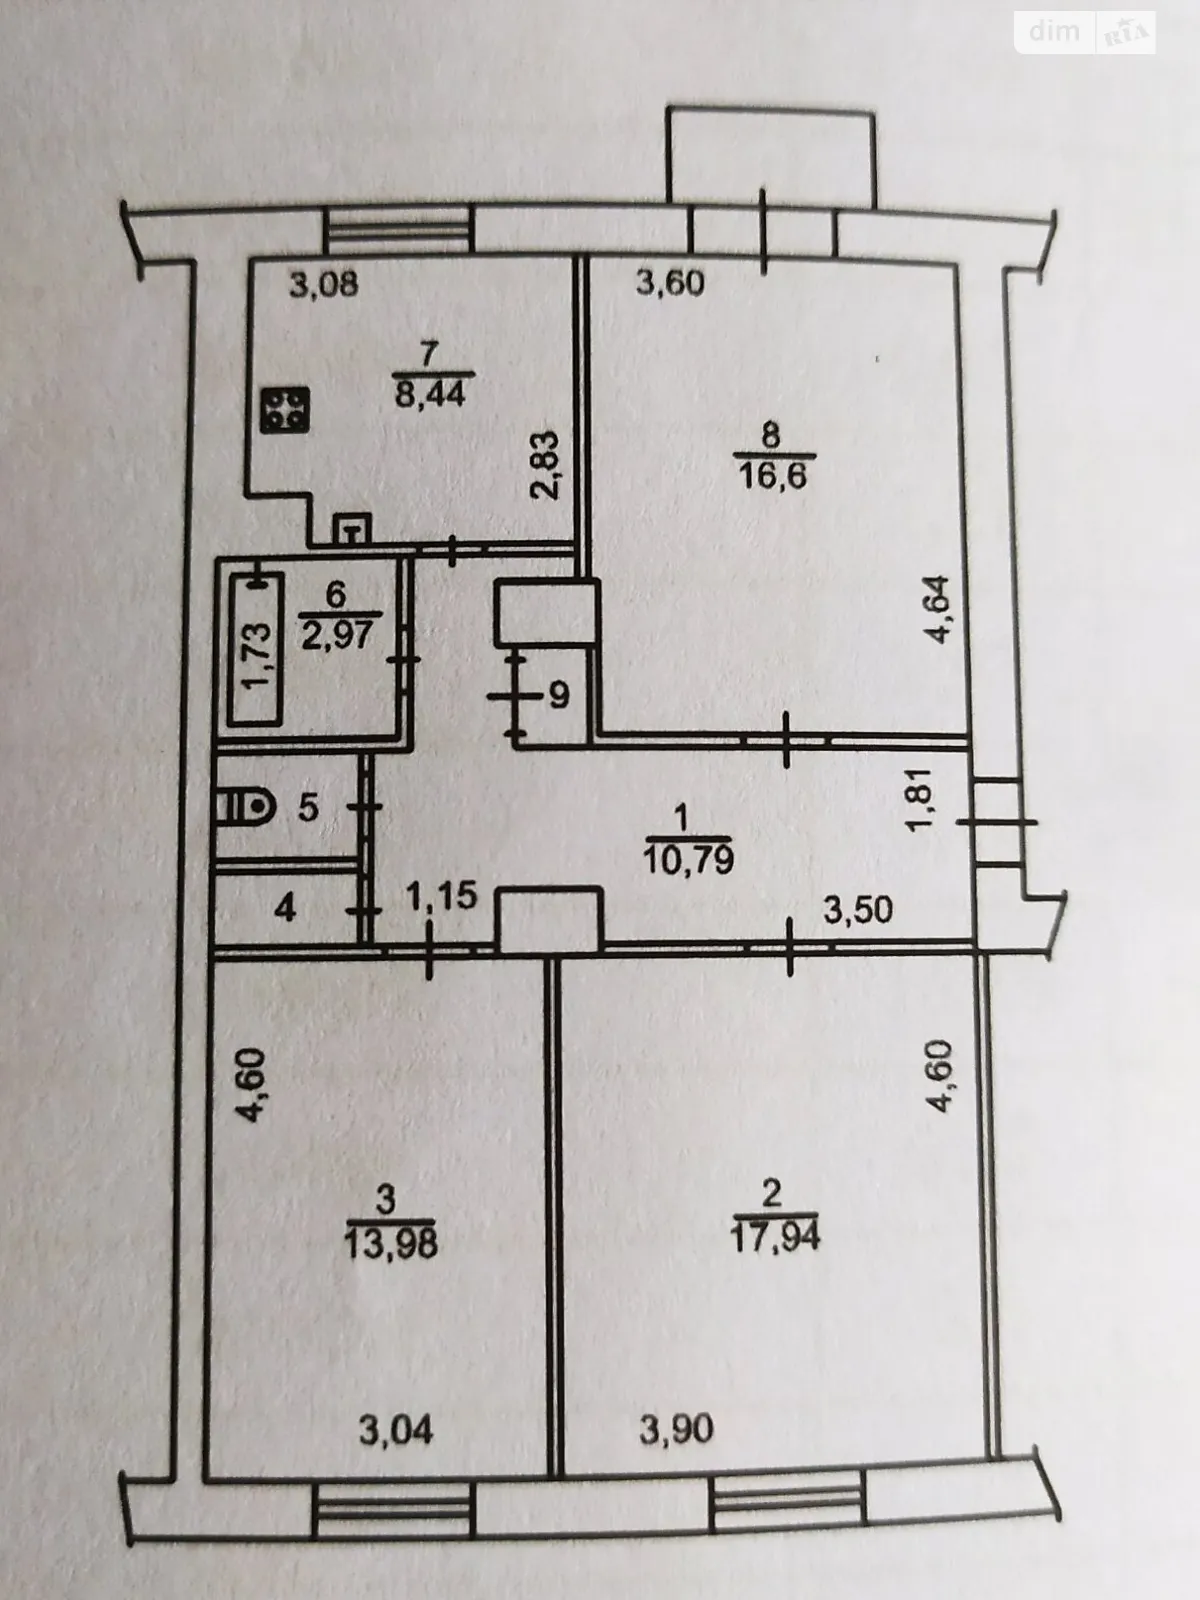 3-комнатная квартира 74 кв. м в Запорожье